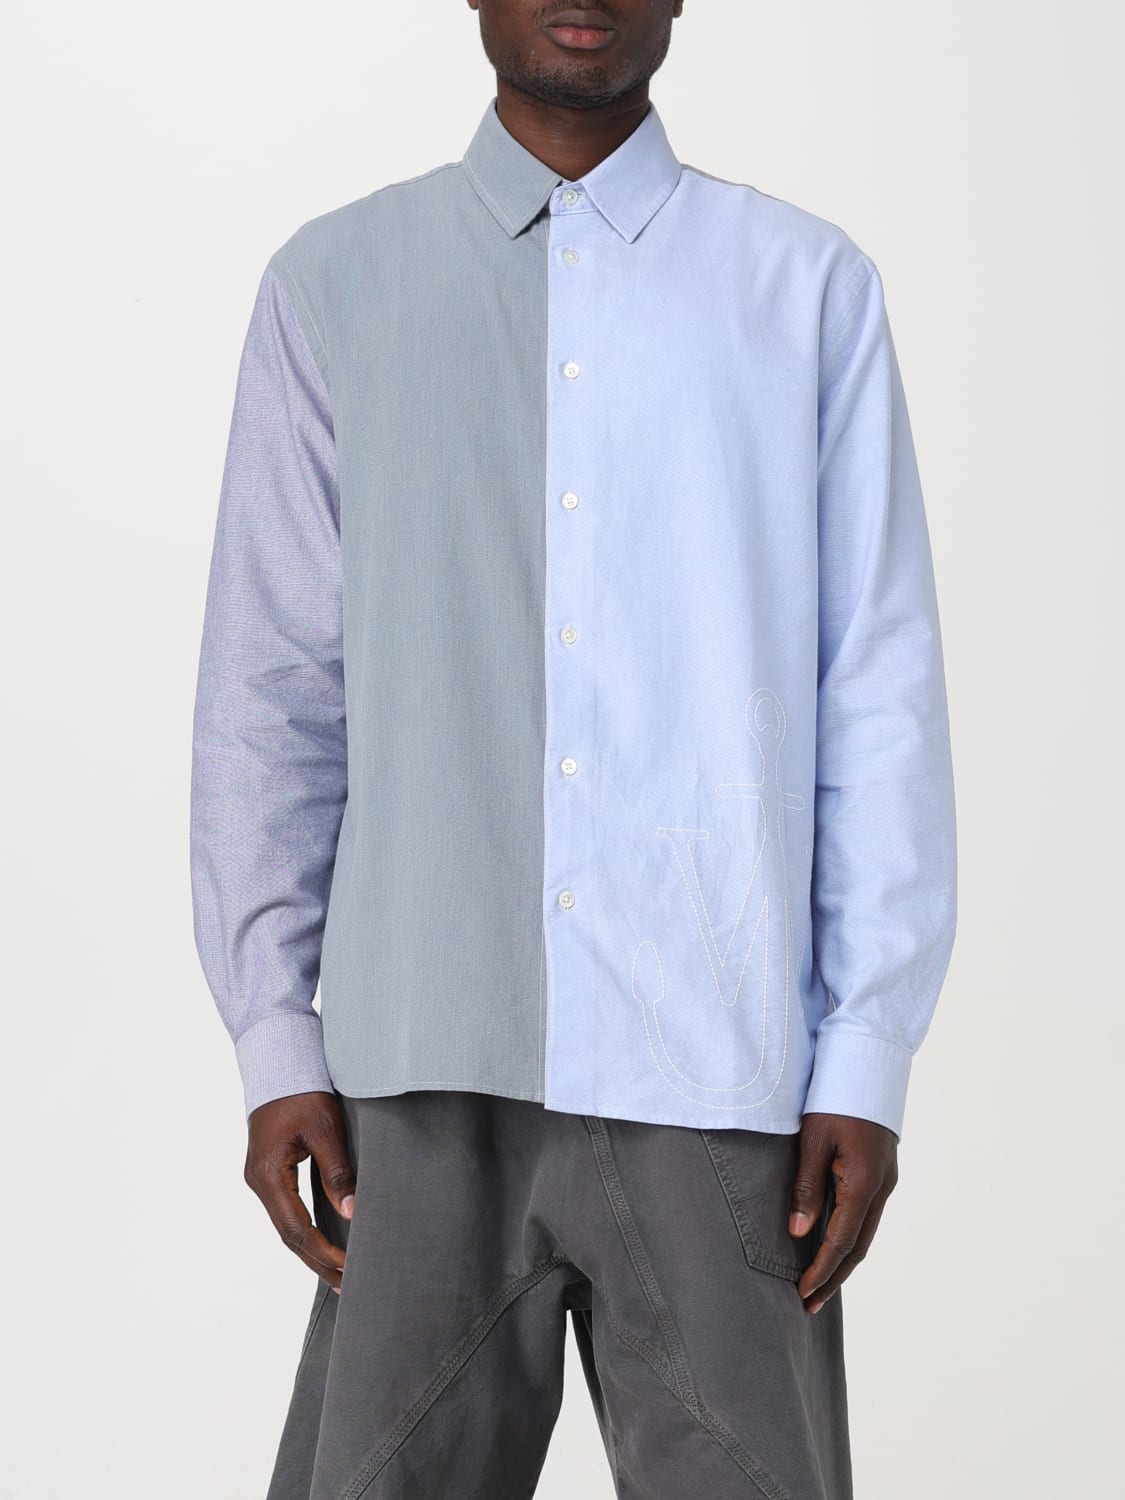 JW Anderson Blue & Gray Printed Shirt